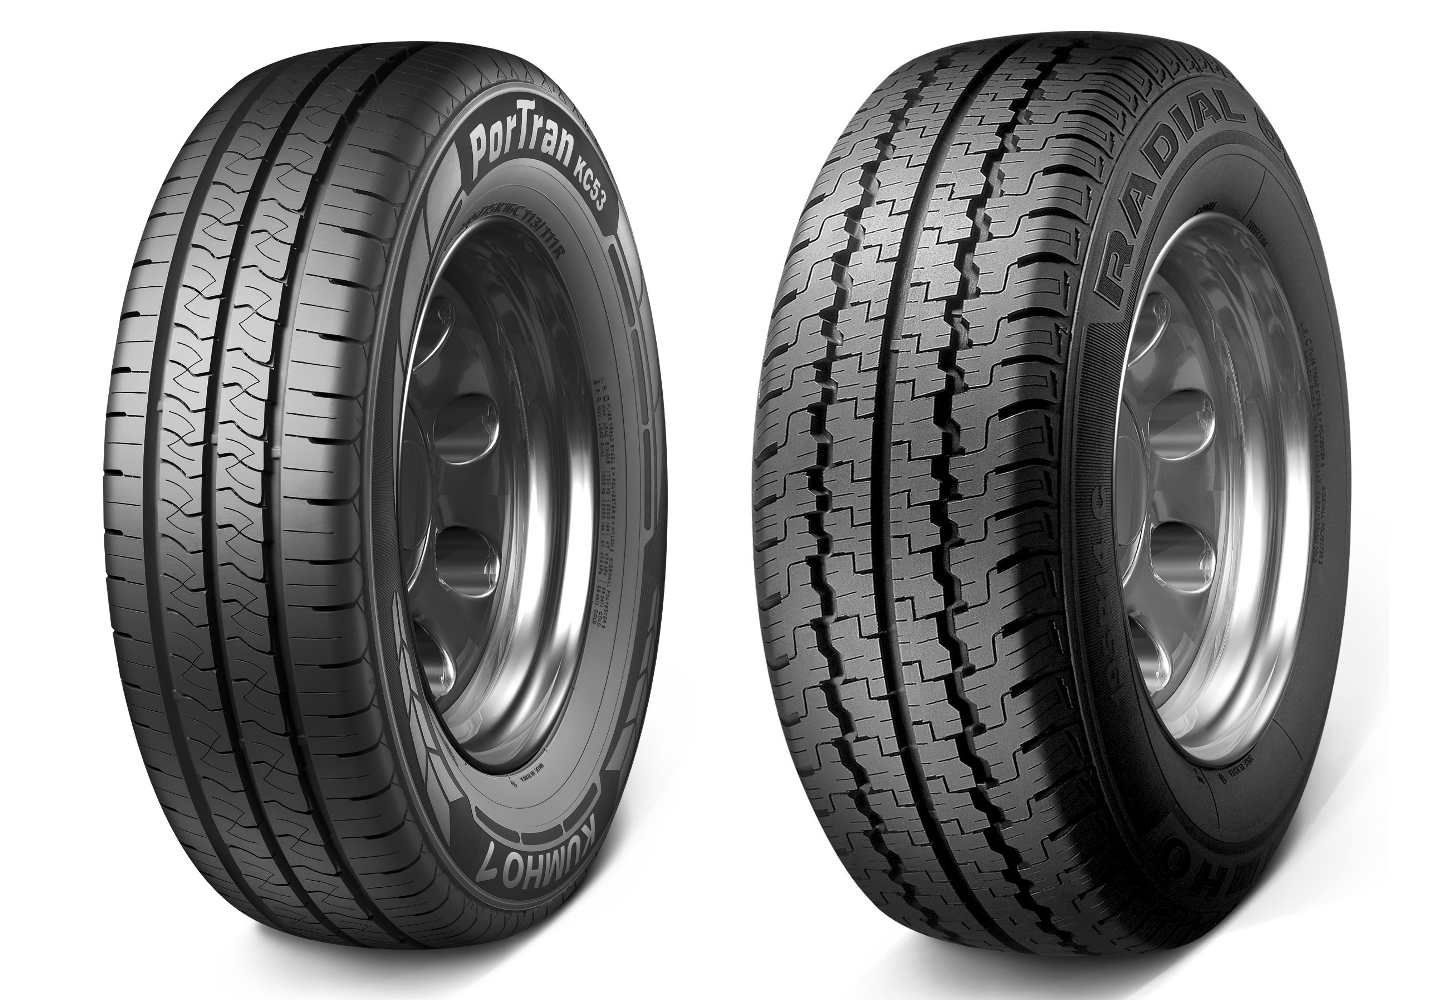 New Kumho Portran KC53 van tyre to replace Radial 857 in 15-16” sizes -  Tyrepress